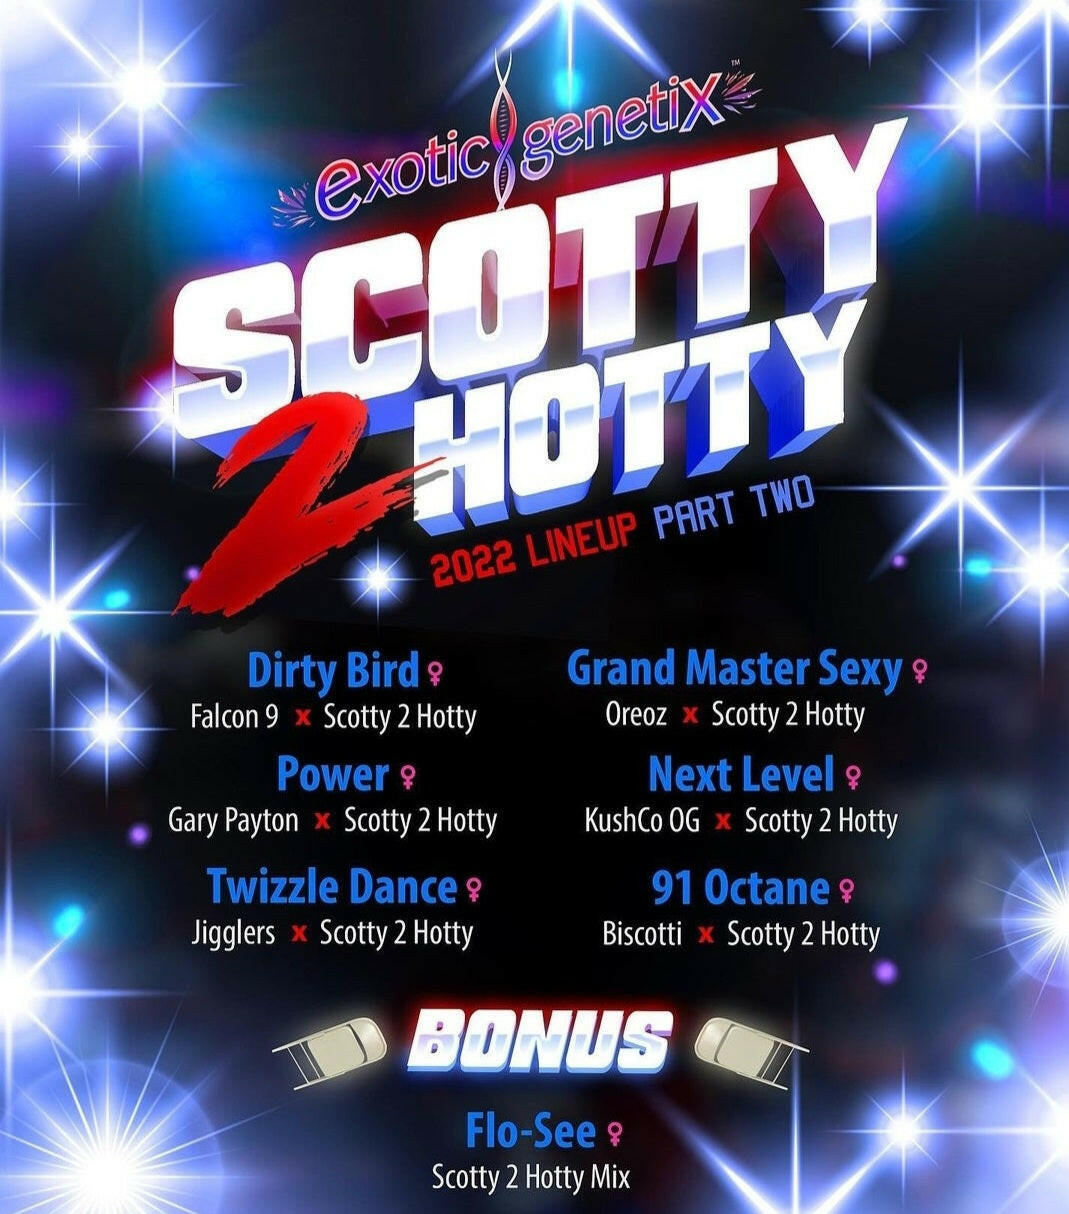 Scotty 2 Hotty Part Two (Exotic Genetix) Exotic Genetix Scotty 2 Hotty Part Two:  Dirty Bird (Falcon 9 x Scotty 2 Hotty)  Power (Gary Payton x Scotty 2 Hotty)  Twizzle Dance (Jigglers x Scotty 2 Hotty)  Grand Master Sexy (Oreoz x Scotty 2 Hotty)  Next Level (KushCoOG x Scotty 2 Hotty)  91 Octane (Biscotti x Scotty 2 Hotty)    Bonus: Flo-See 